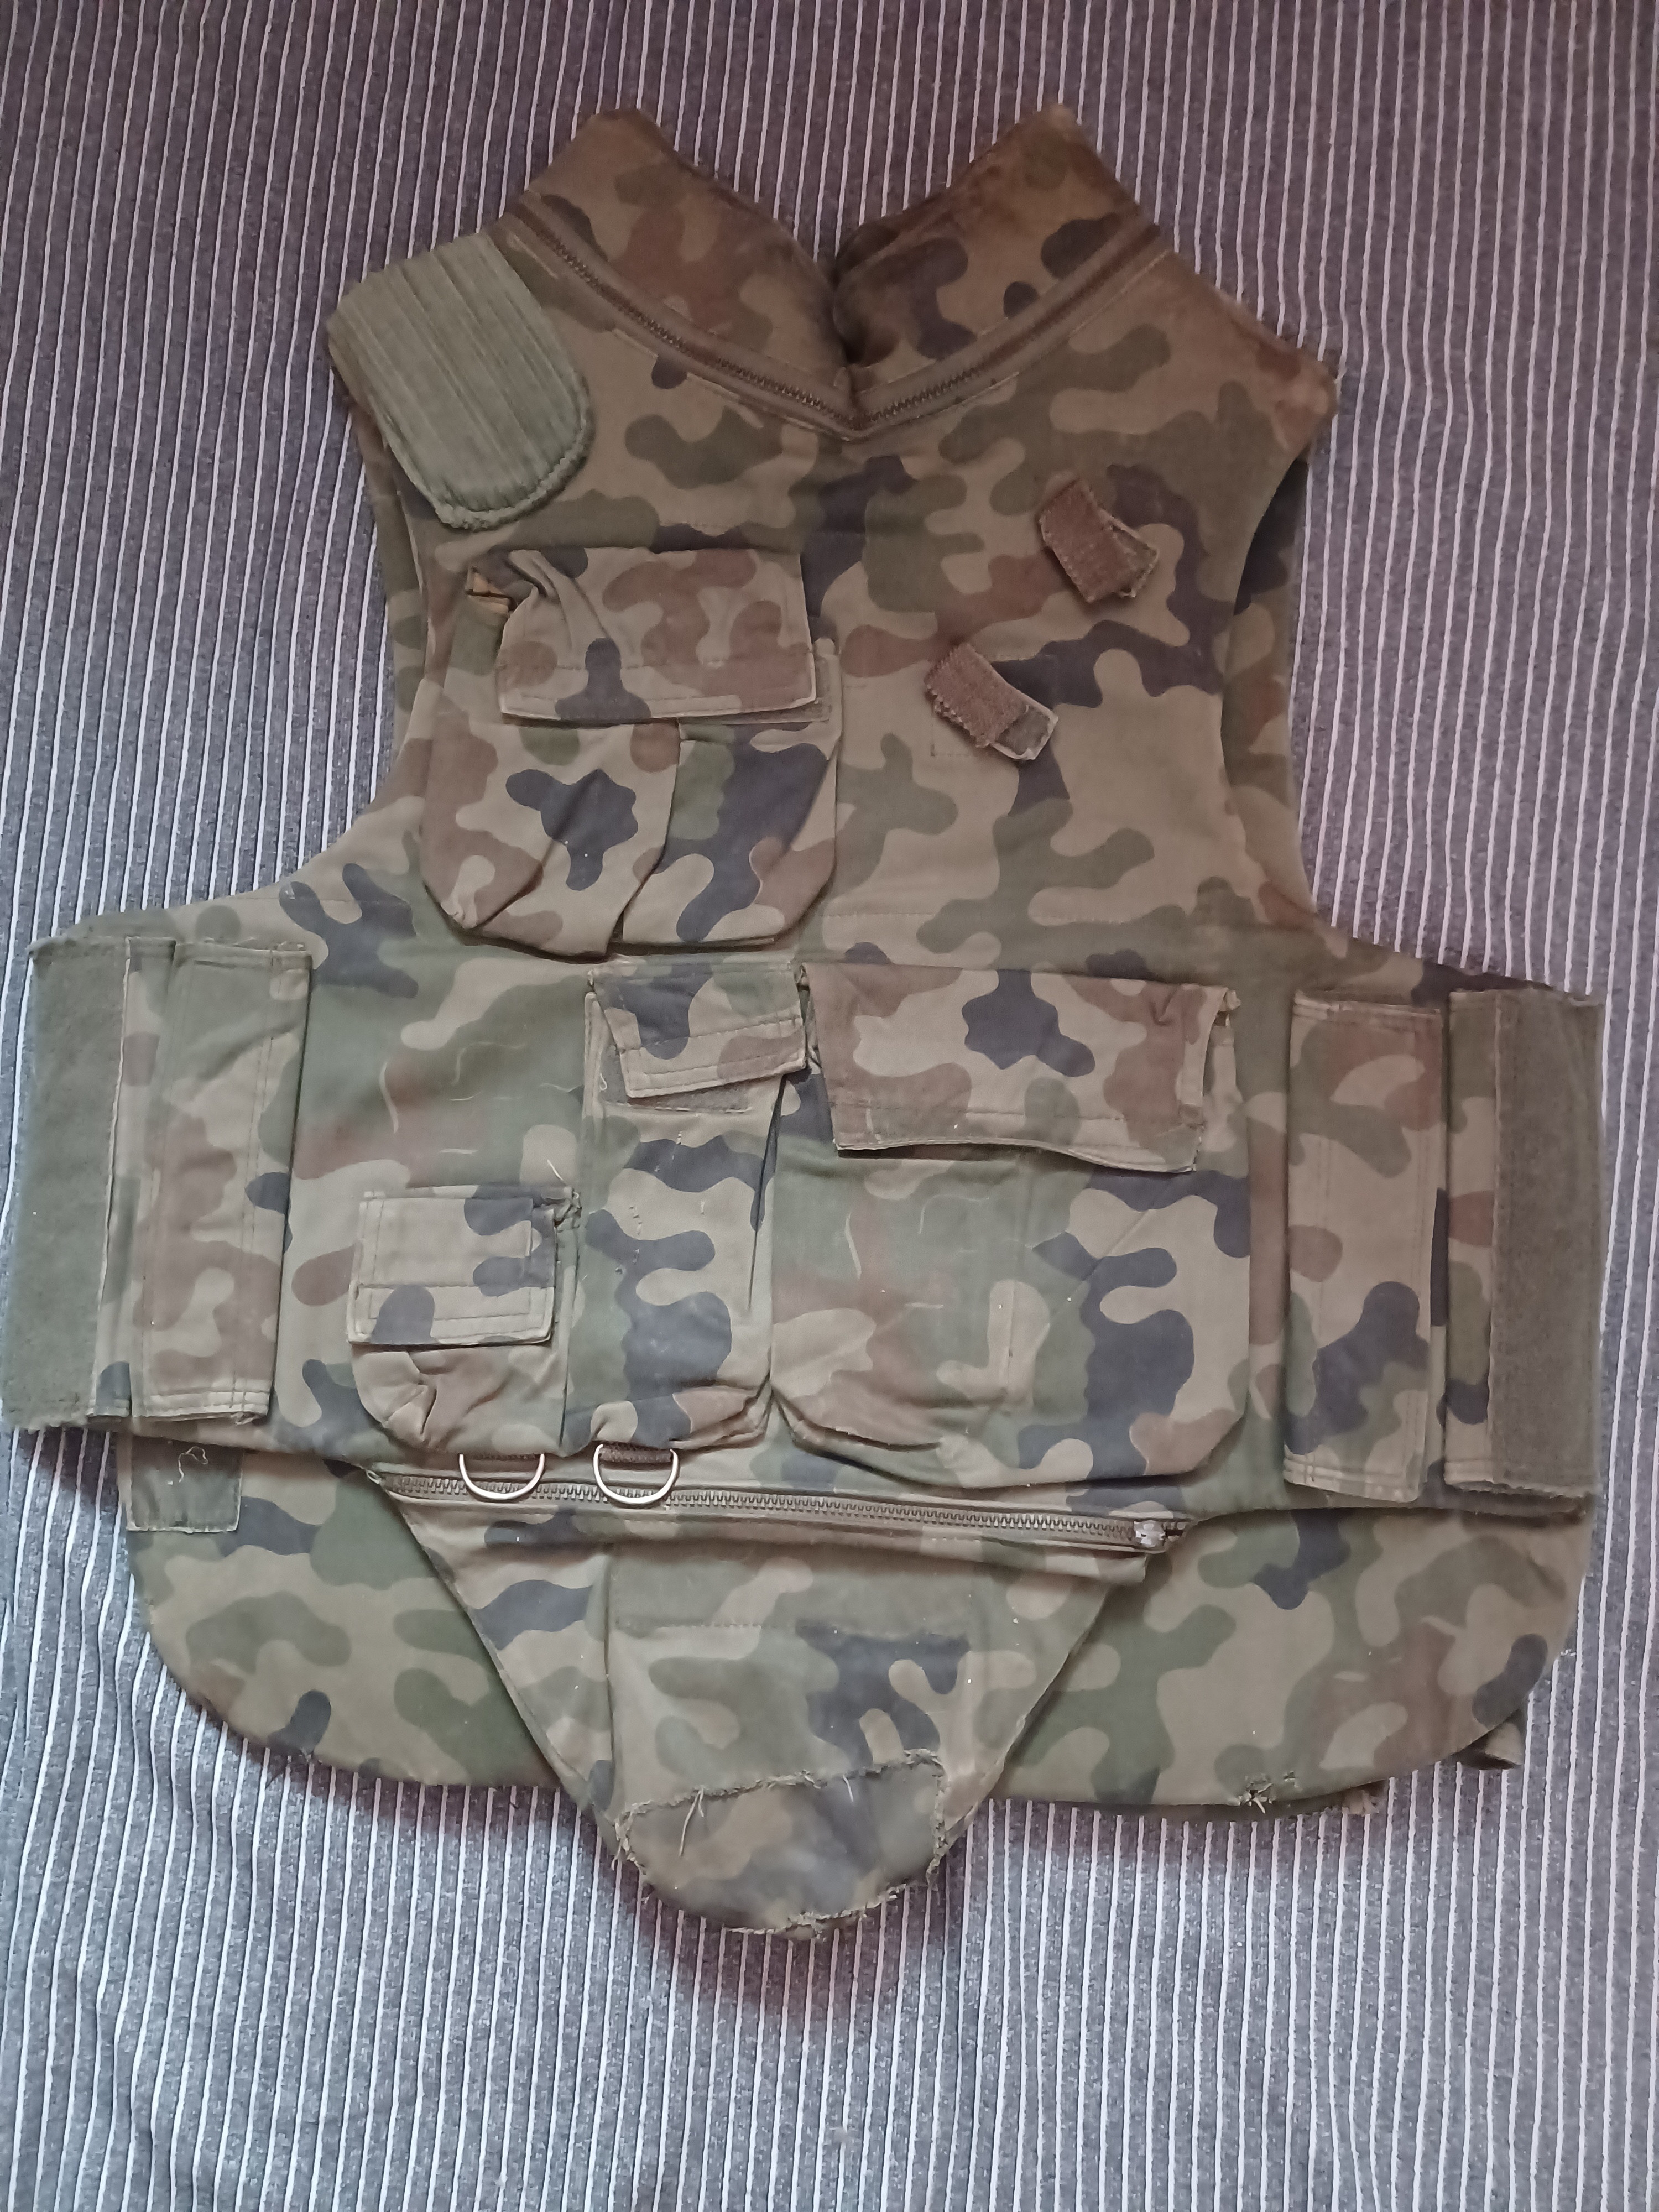 1990s Polish body armor vest - OCHRA 20210922-172455